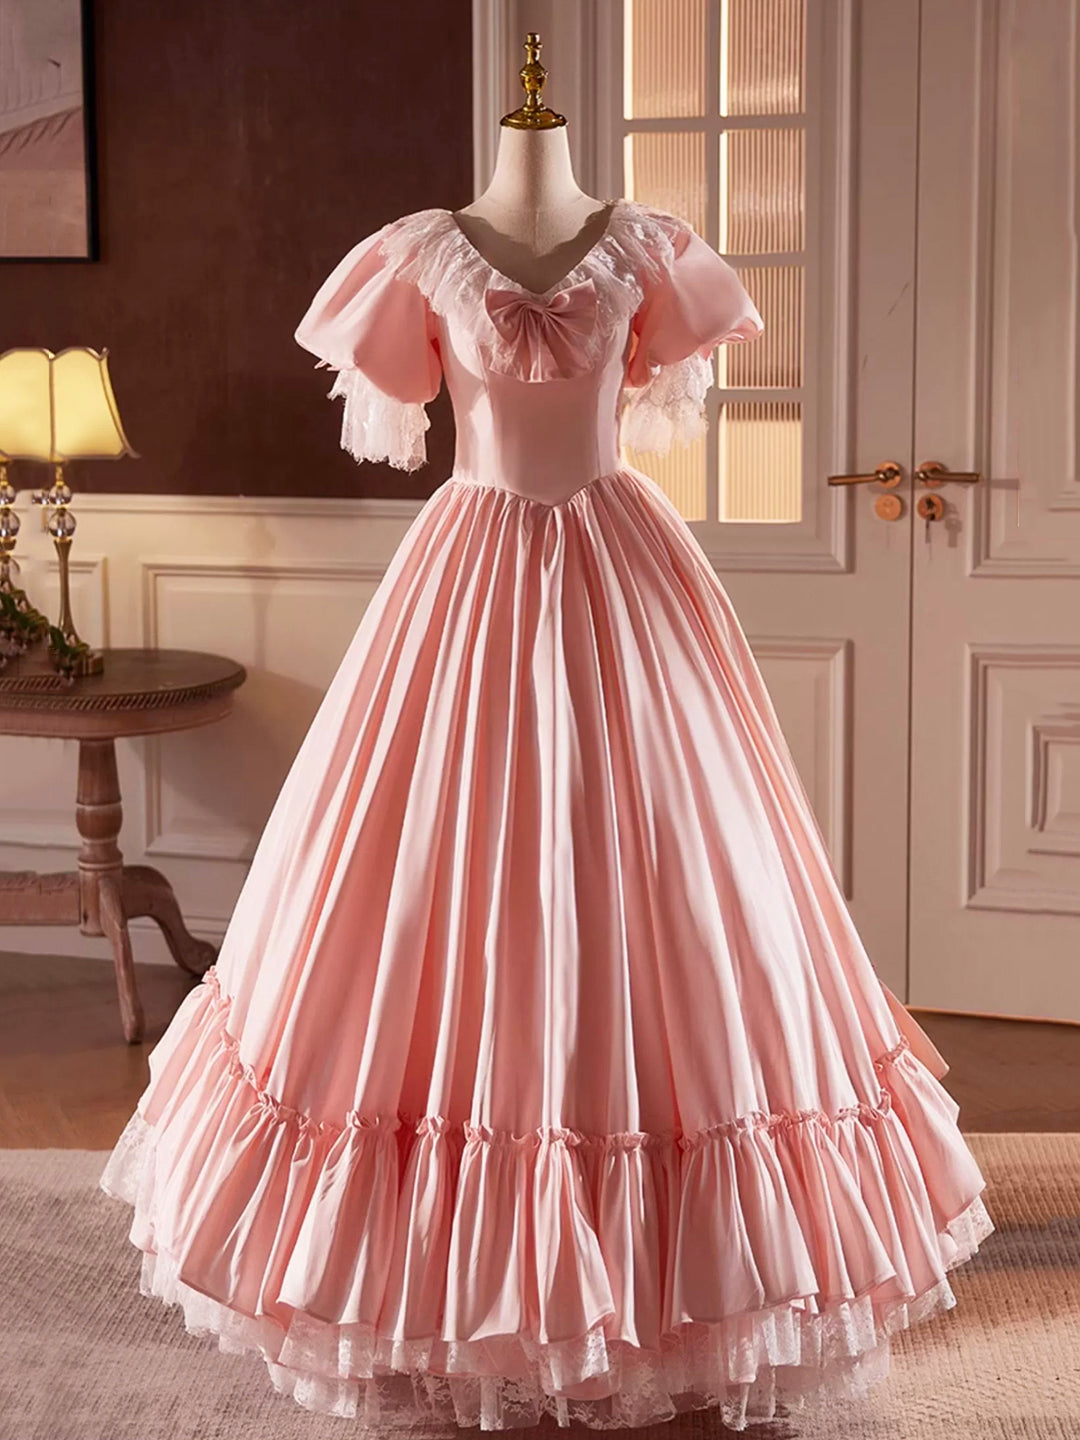 Pink Satin Lace Long Corset Prom Dress, Beautiful A-Line V-Neck Evening Dress outfit, Bridesmaids Dresses Summer